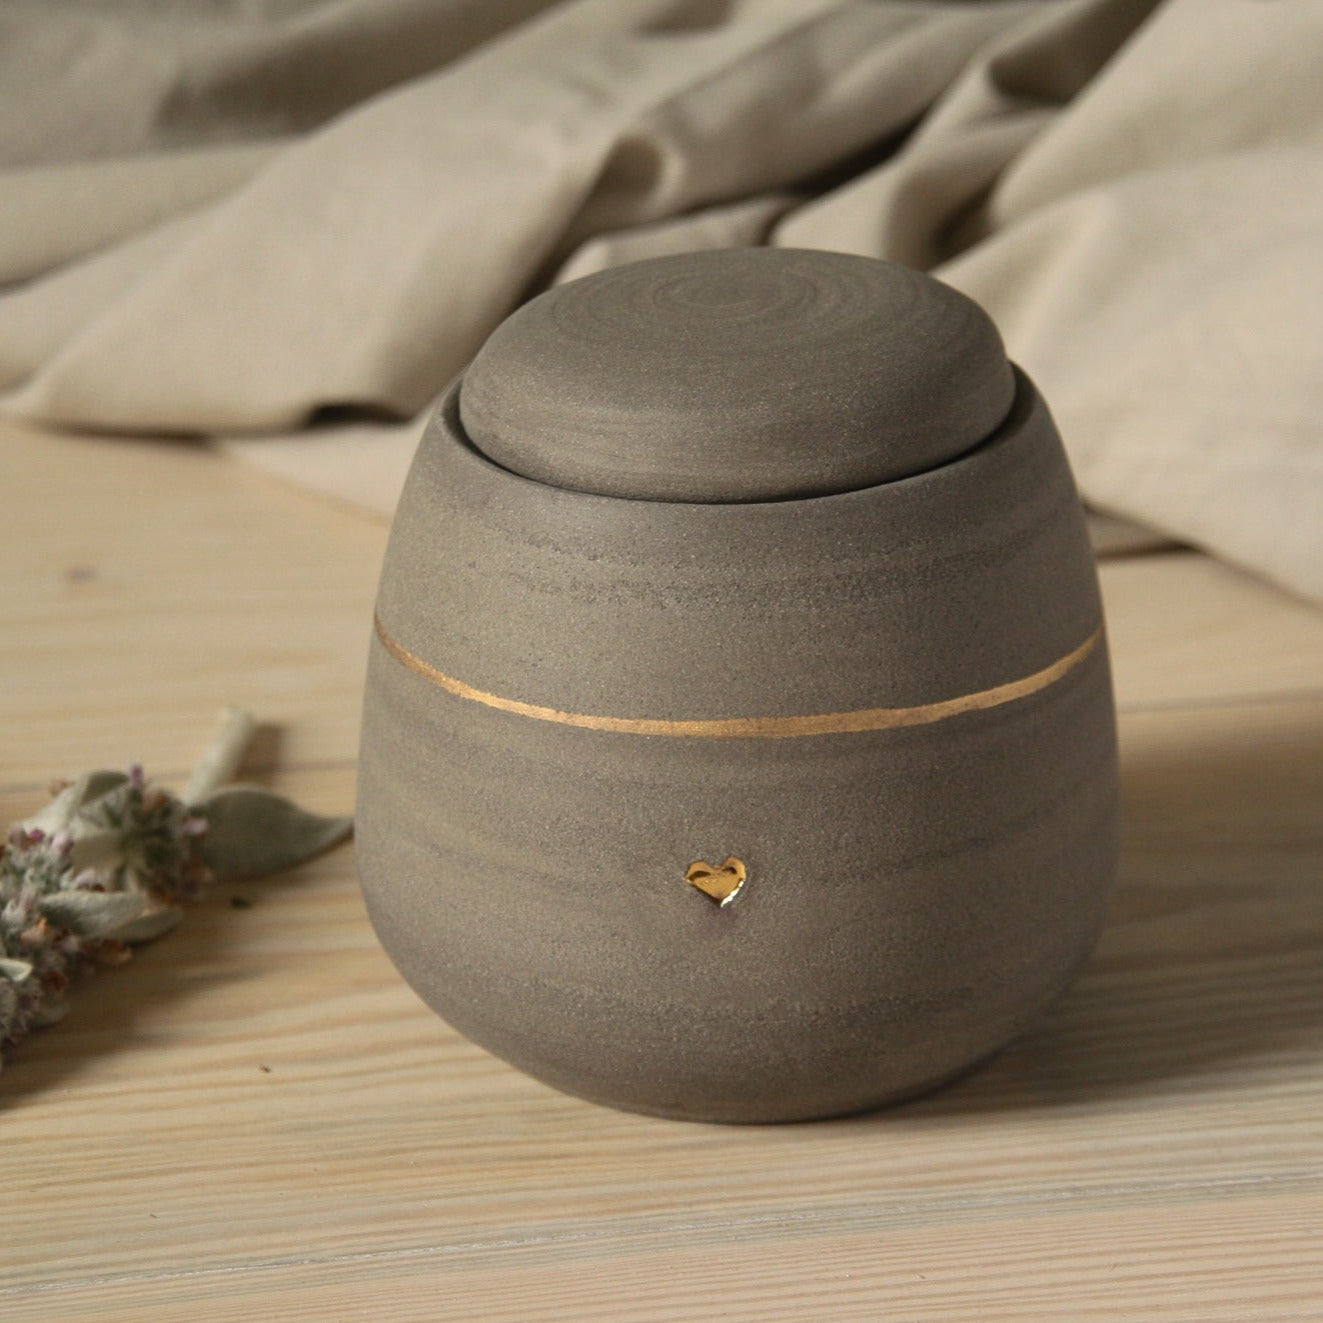 Handmade pottery dog urn